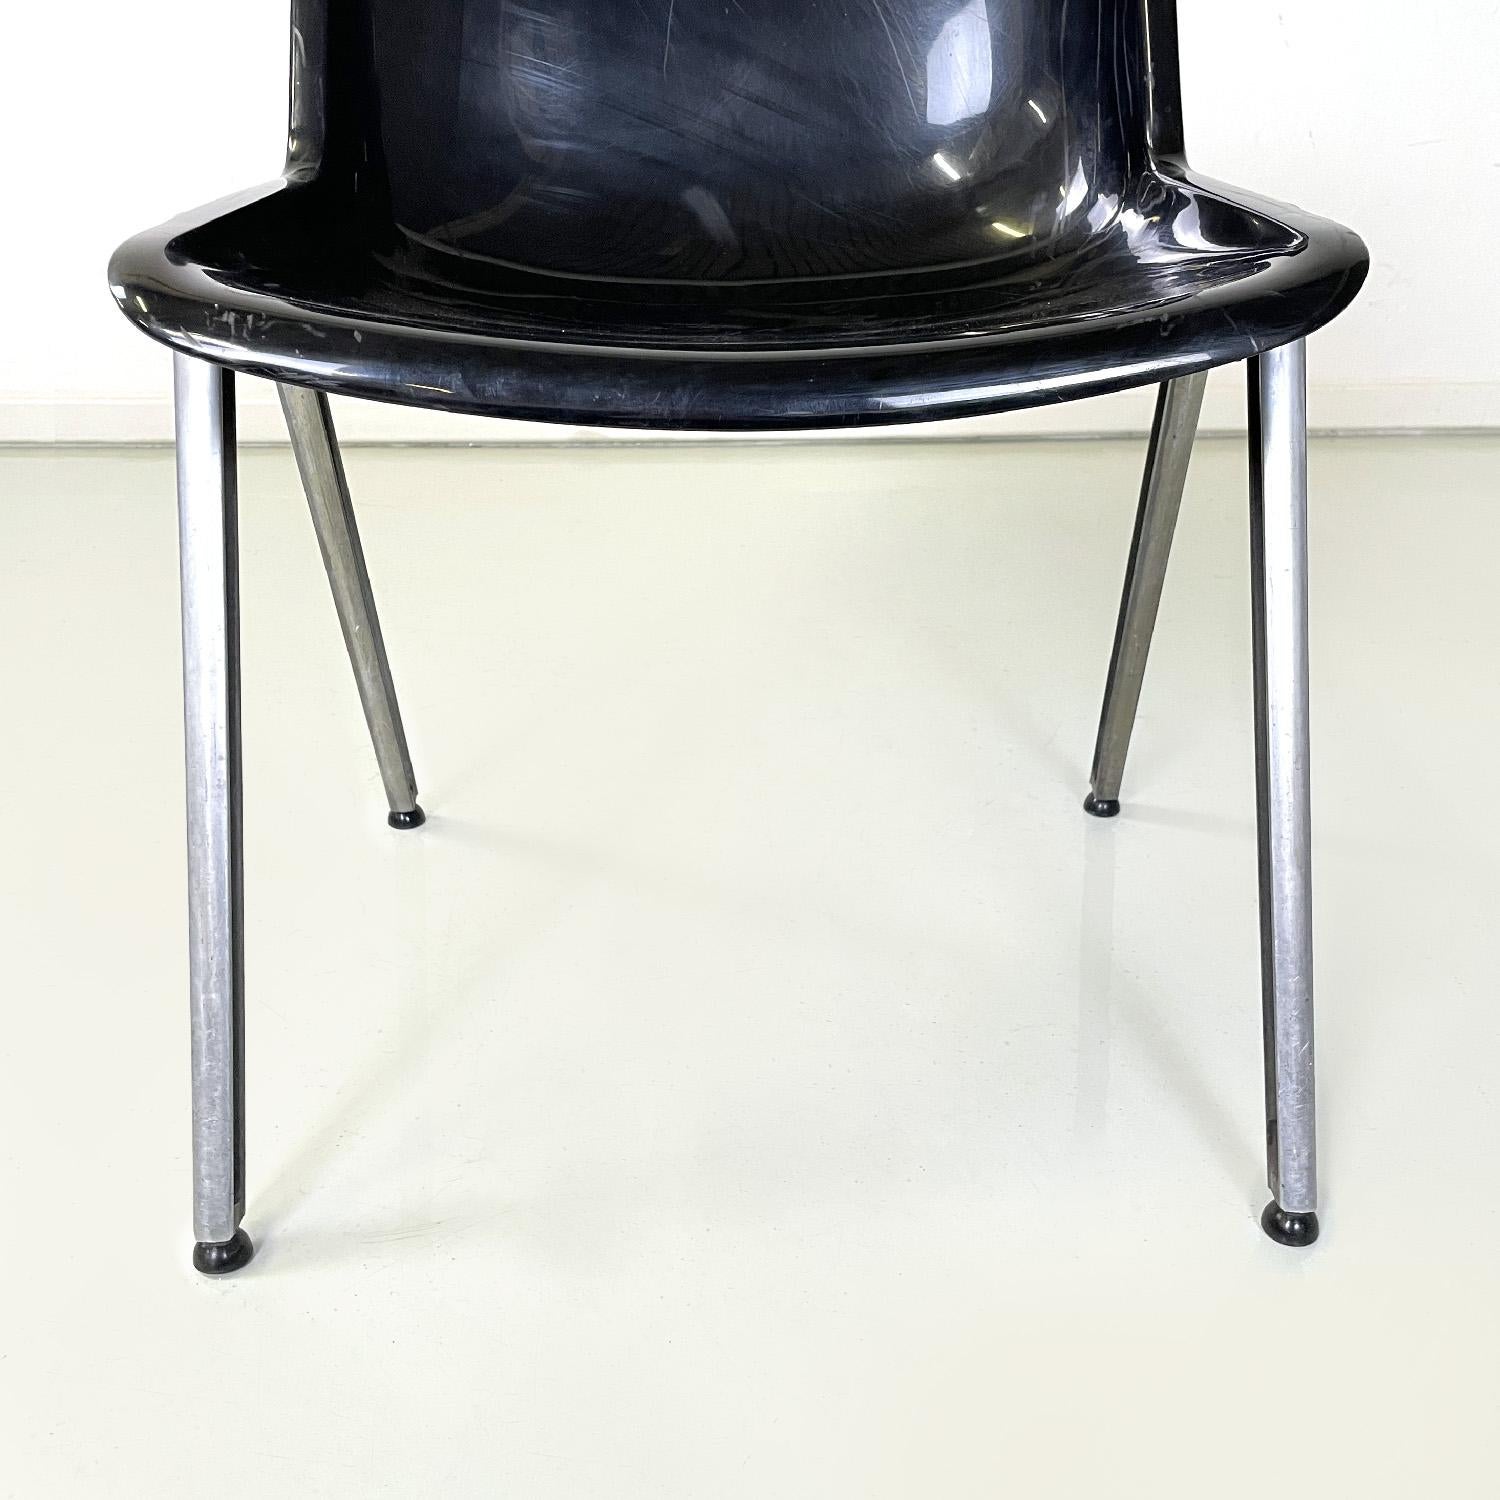 Italian modern black plastic chairs Modus SM 203 by Borsani for Tecno, 1980s For Sale 8